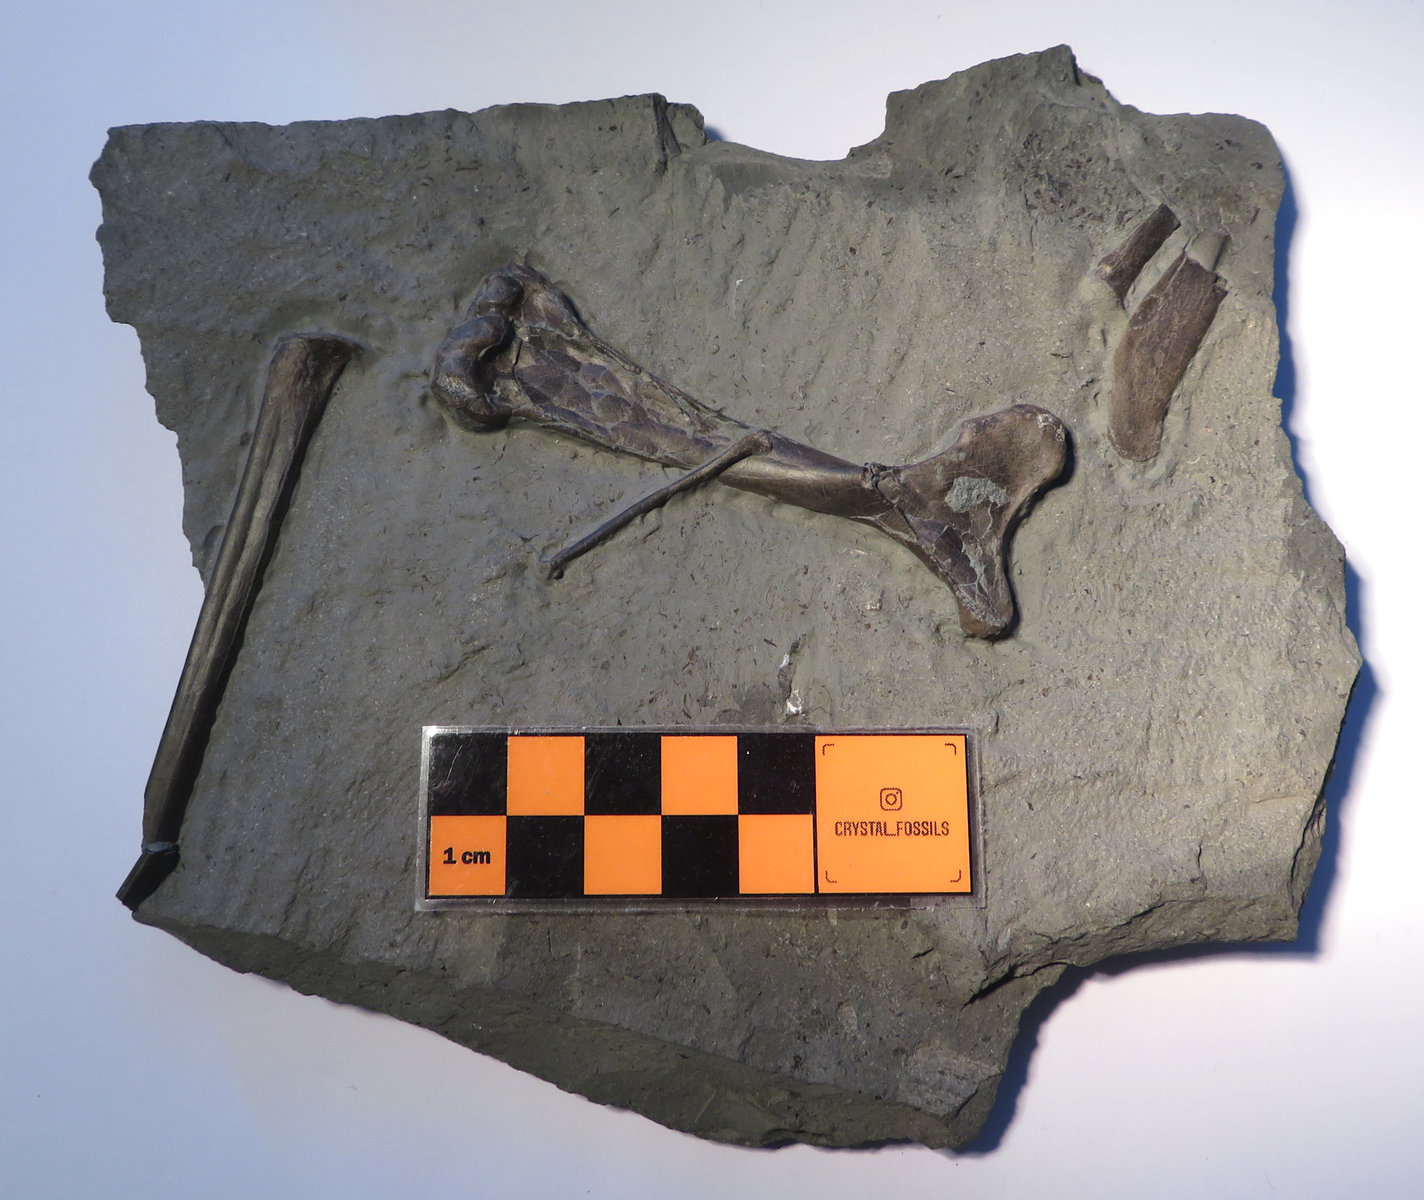 pterosaur bones (perhaps Dorygnathus)